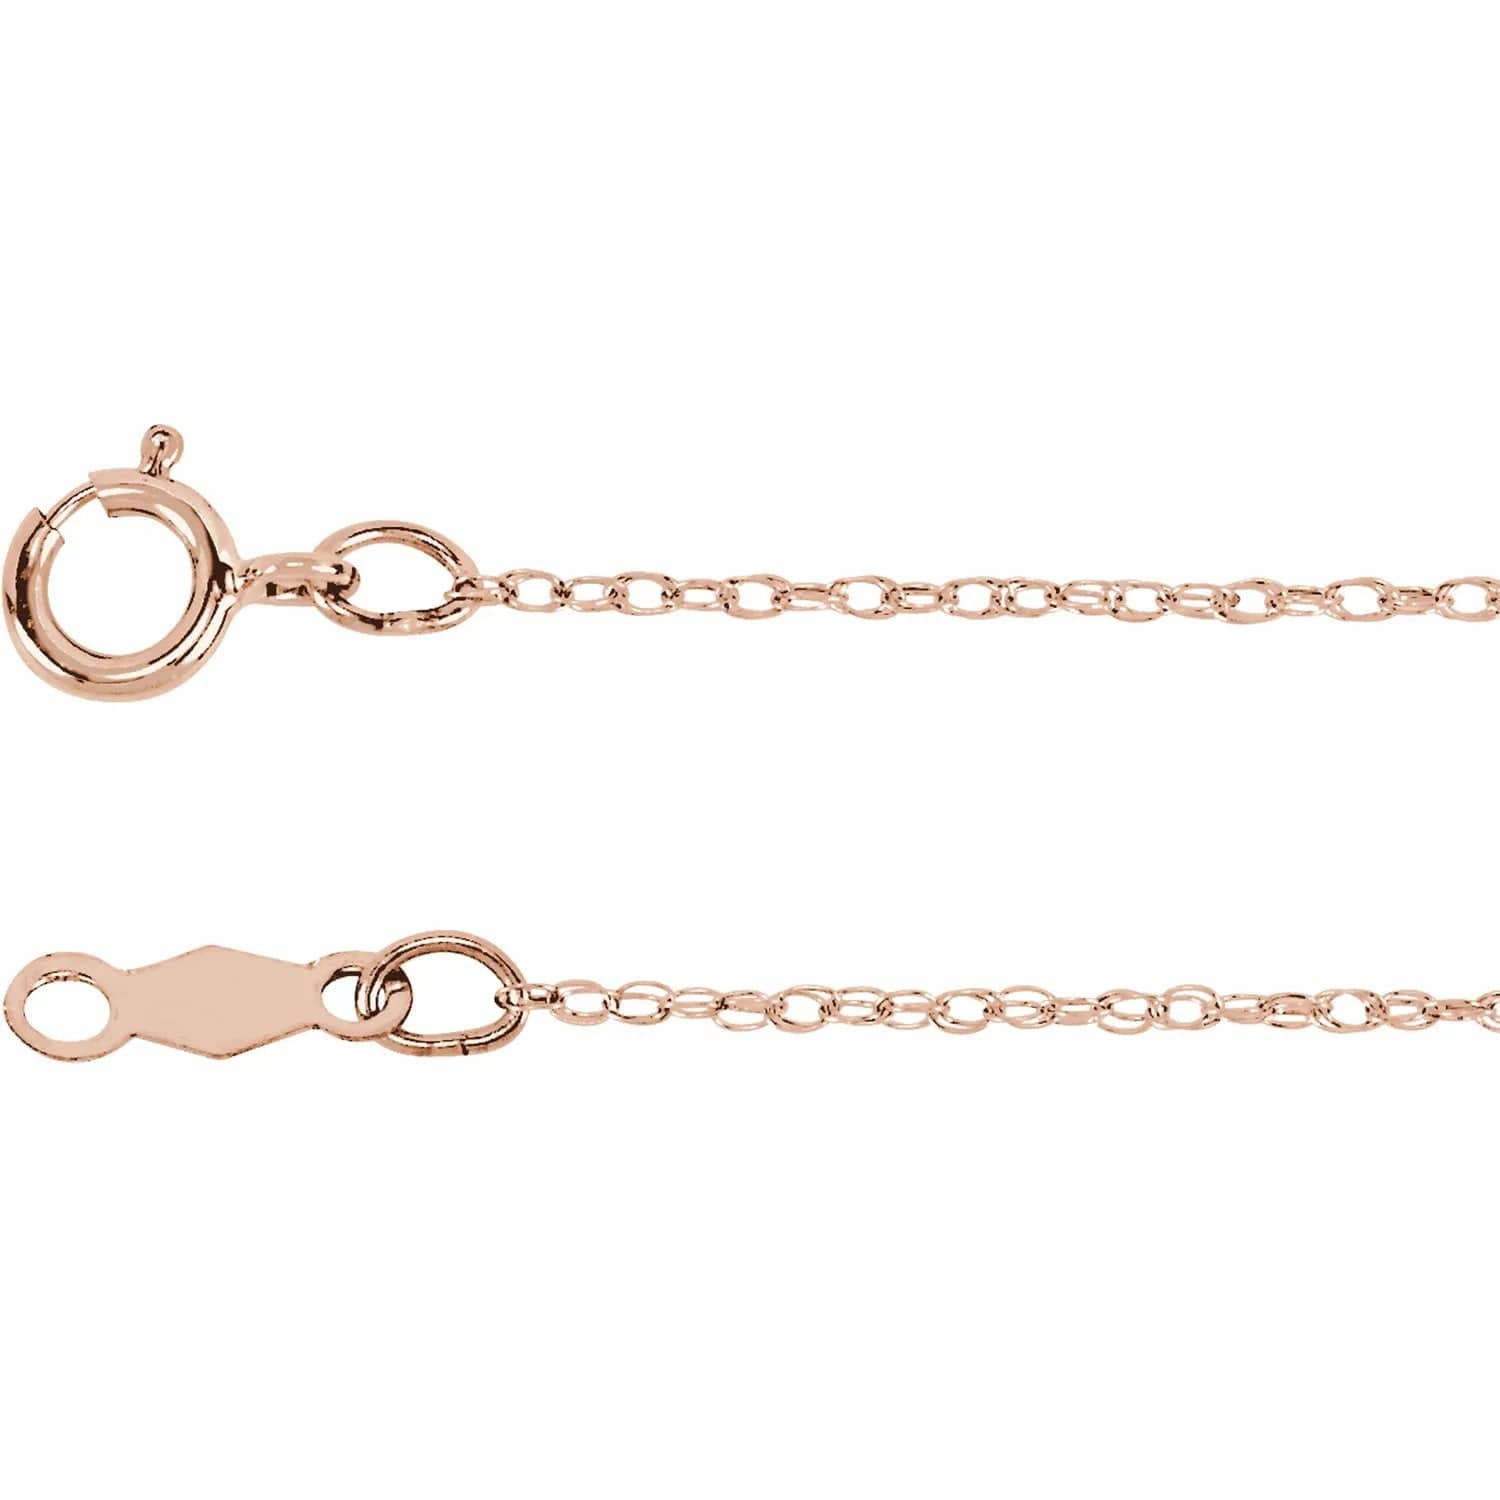 saveongems Jewelry 16 Inch / 14K Rose Rope Chain Necklace